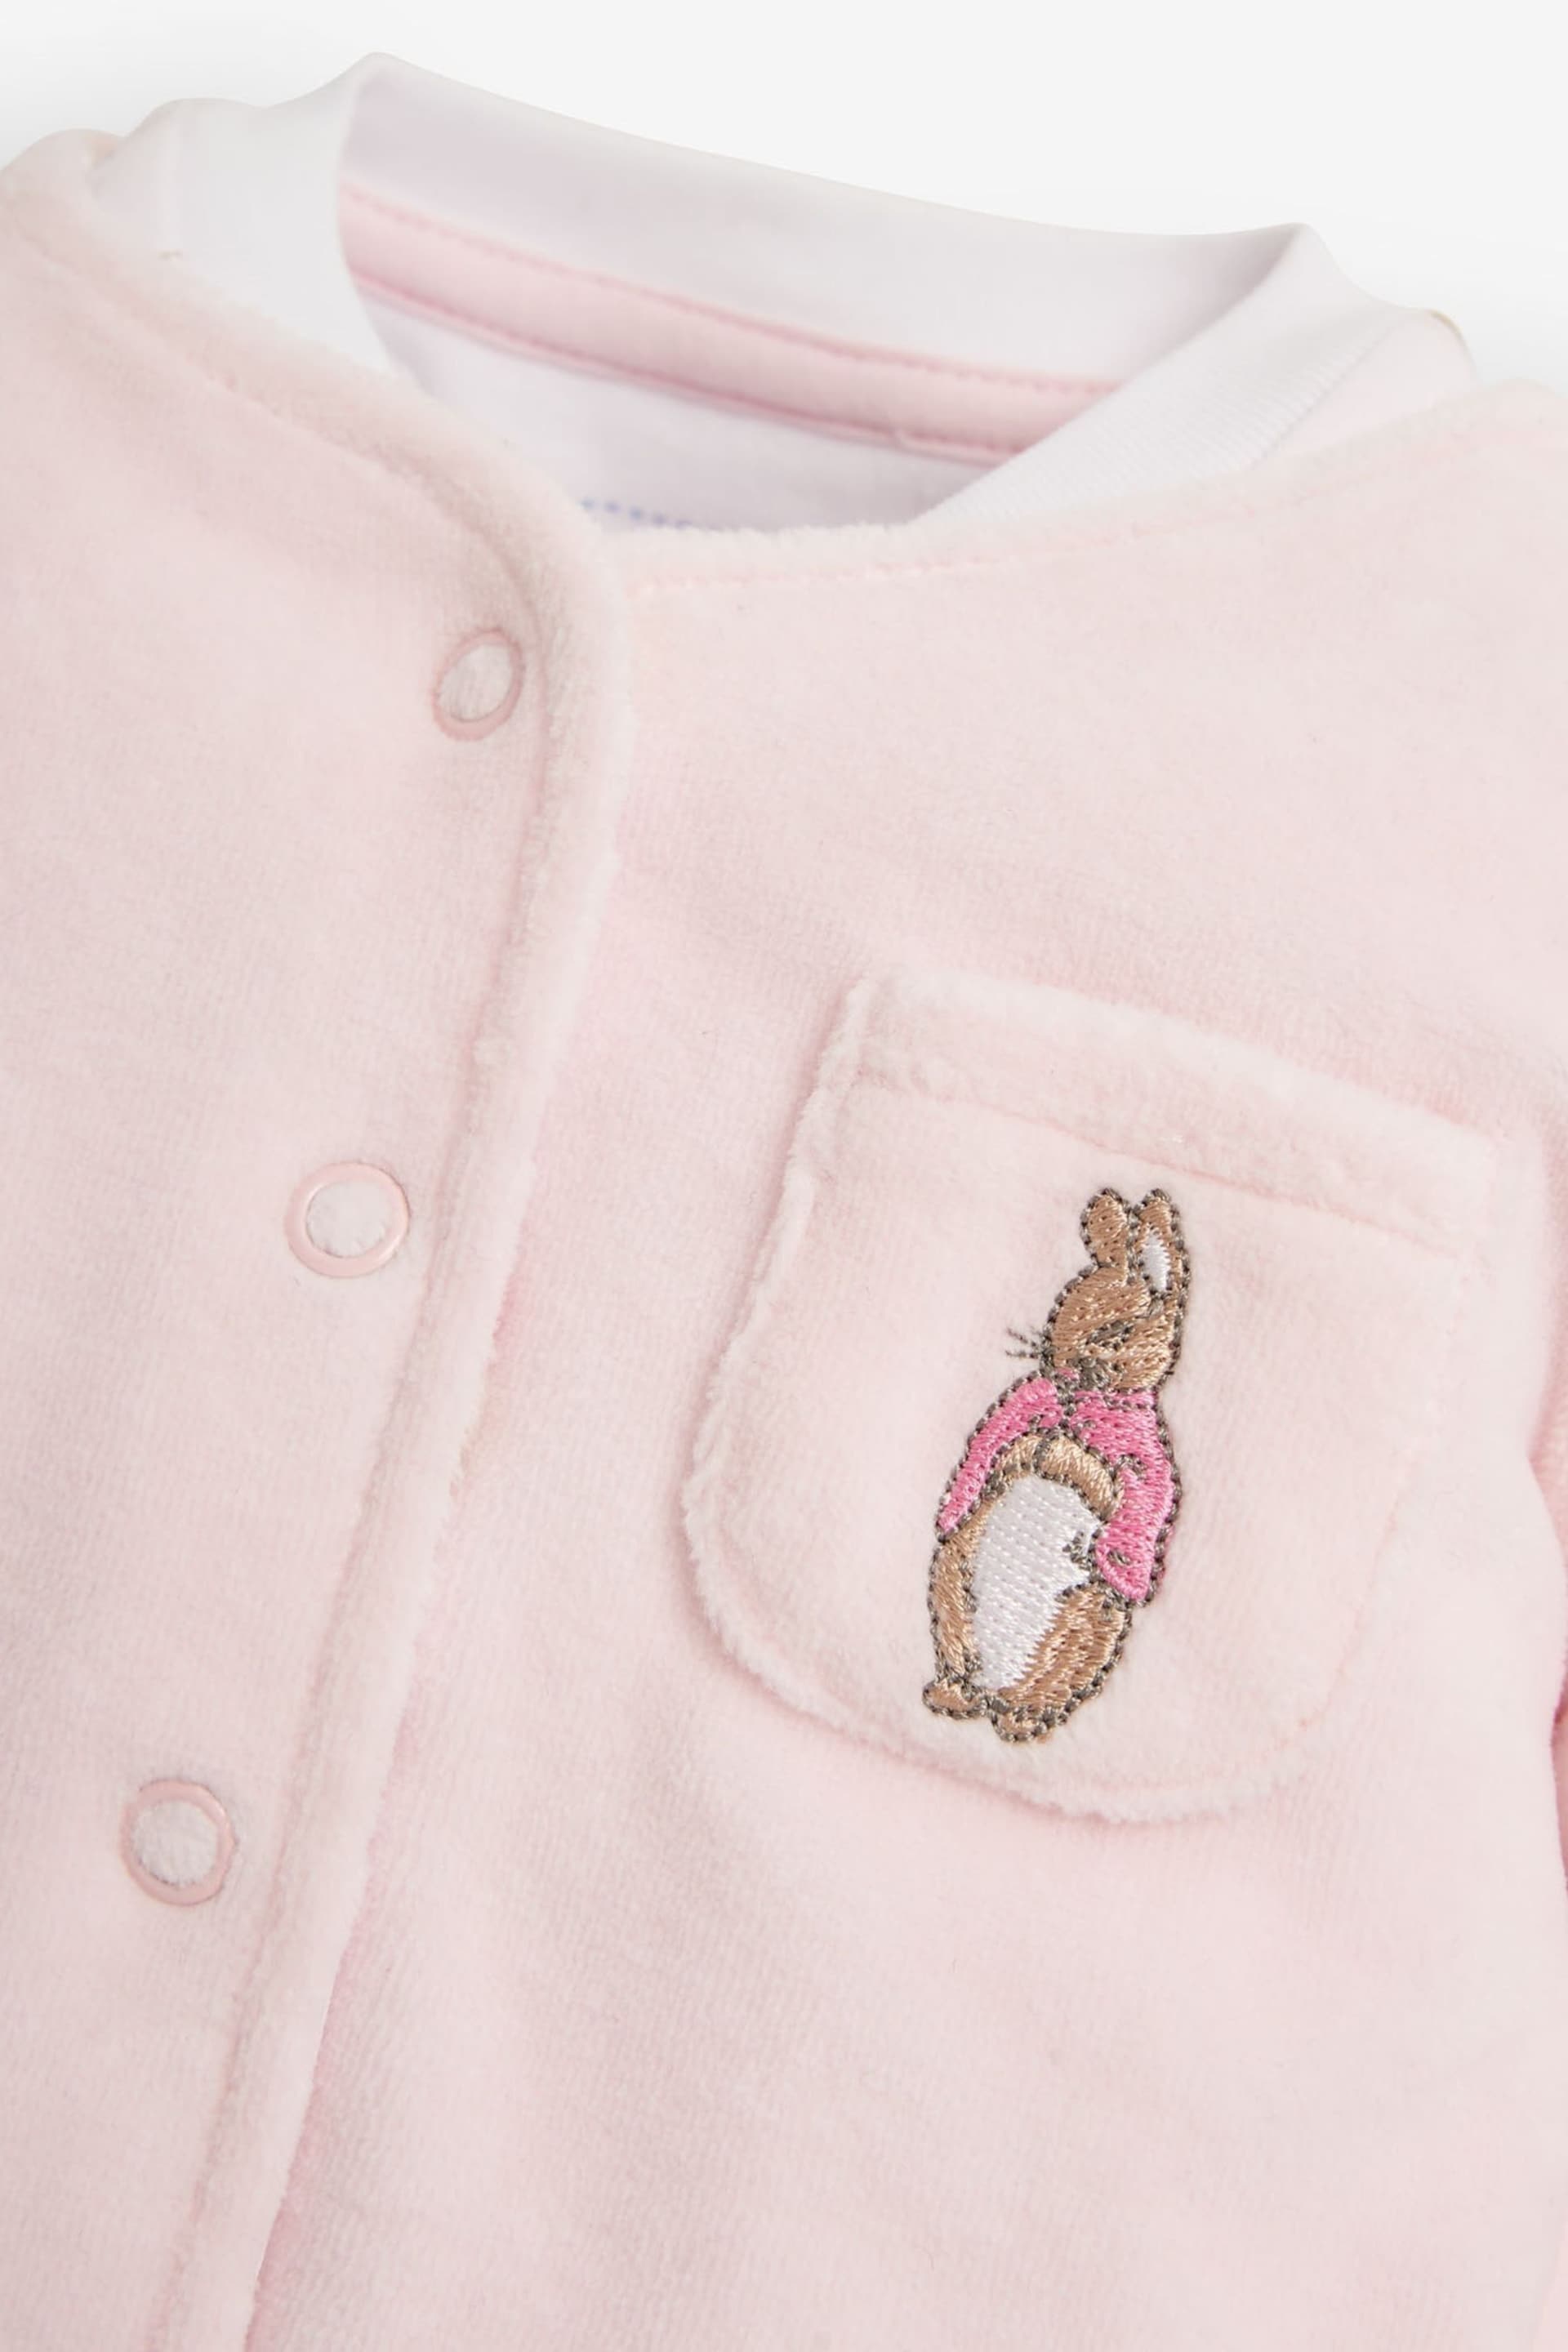 JoJo Maman Bébé Pink 3-Piece Flopsy Bunny Sleepsuit, Jacket & Hat Set - Image 9 of 9